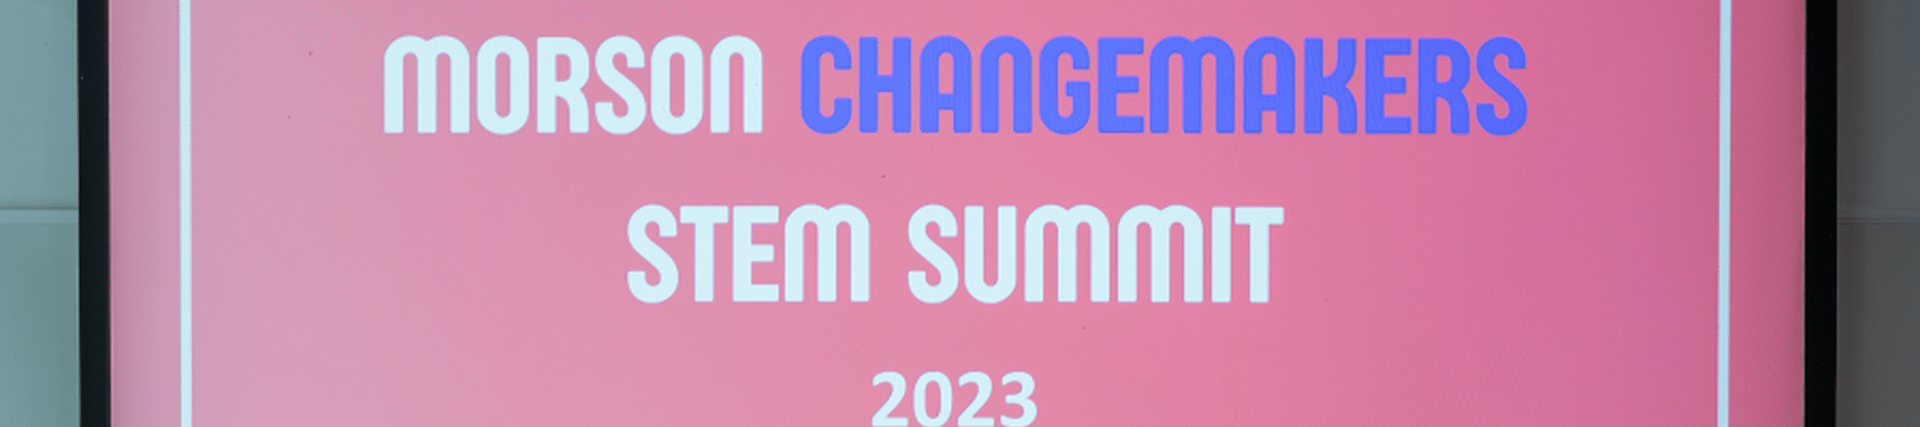 Morson STEM Summit Image